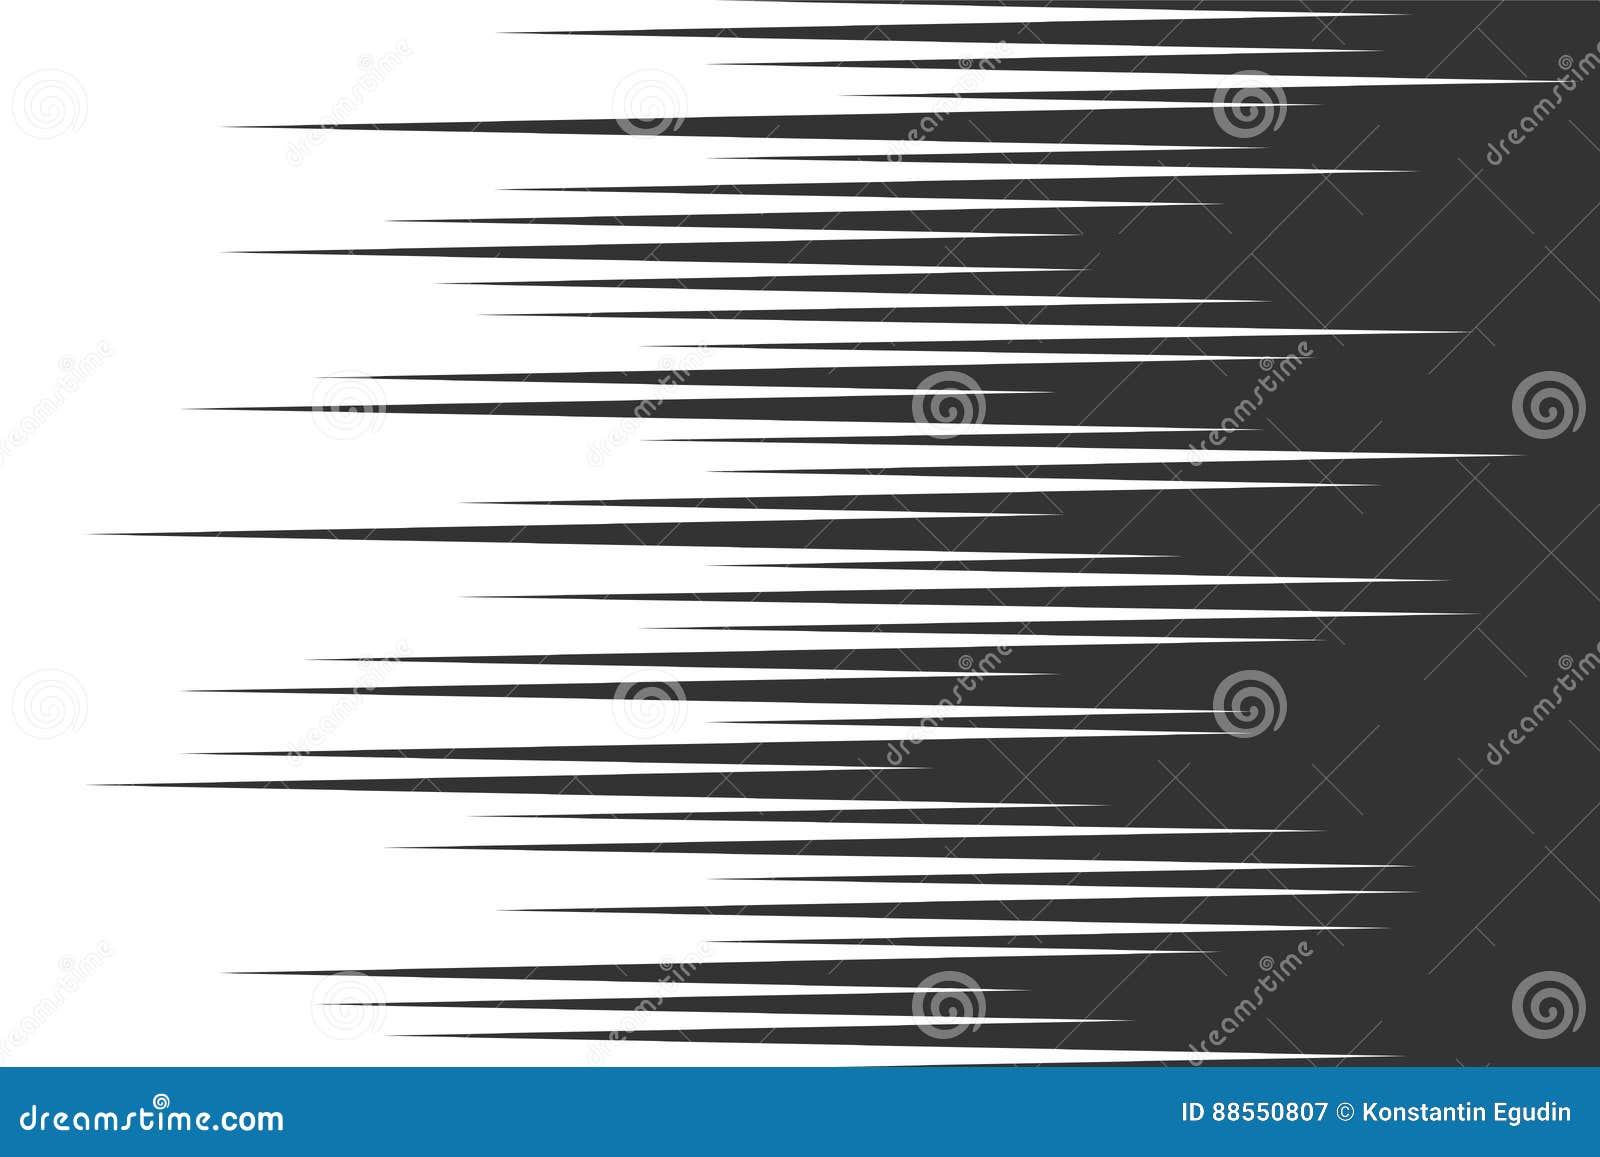 black speed horizontal lines